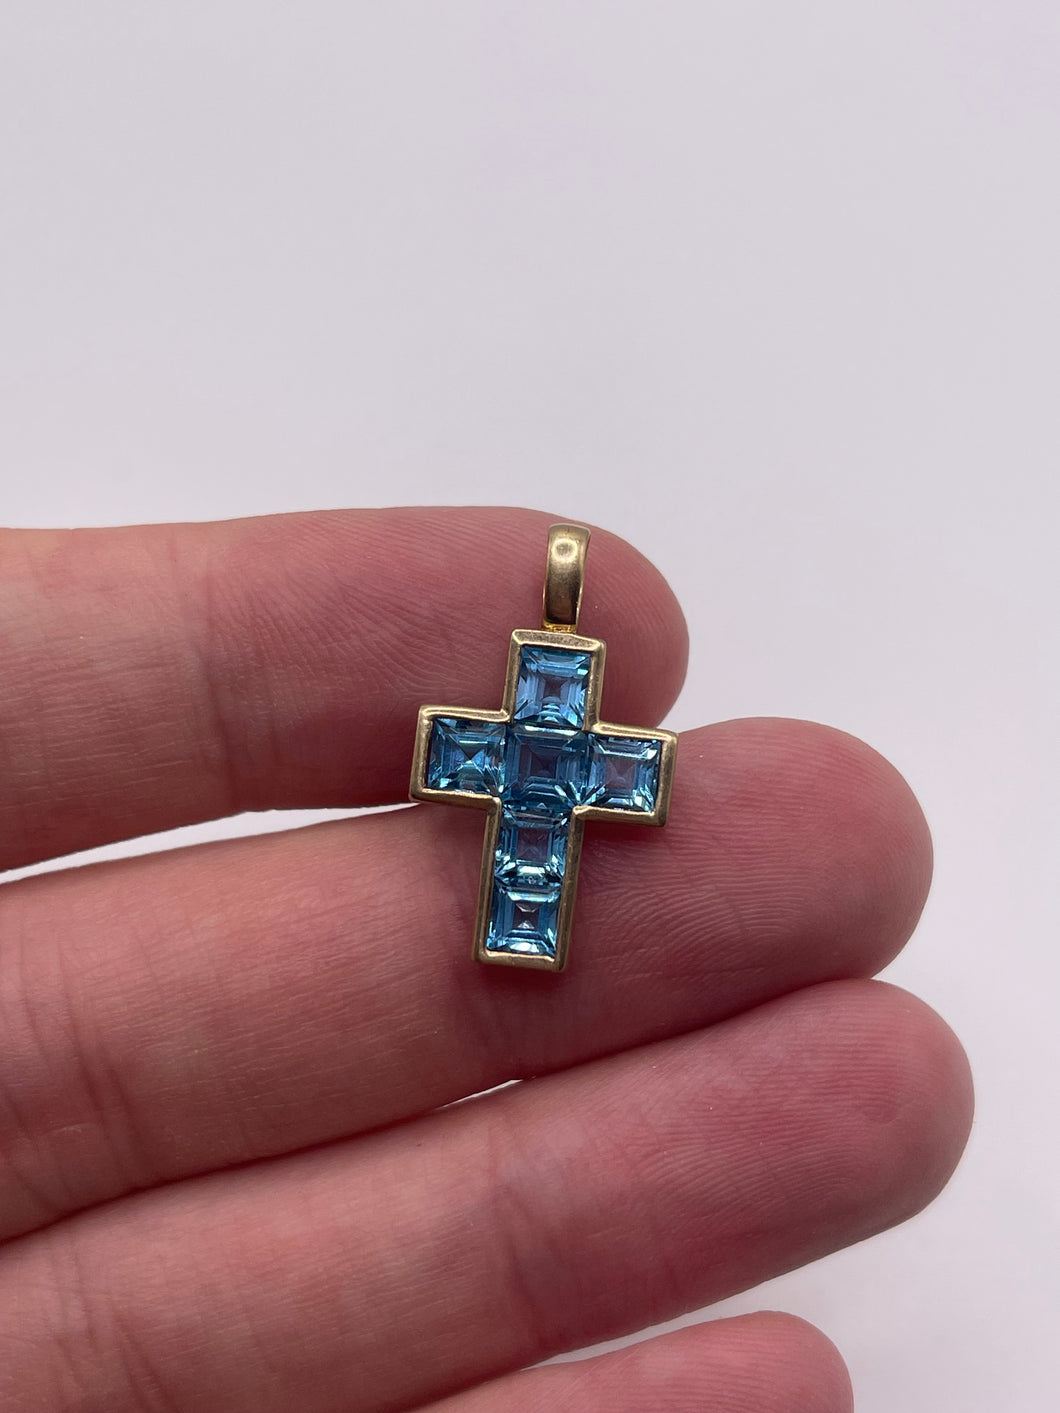 9ct gold blue topaz cross pendant